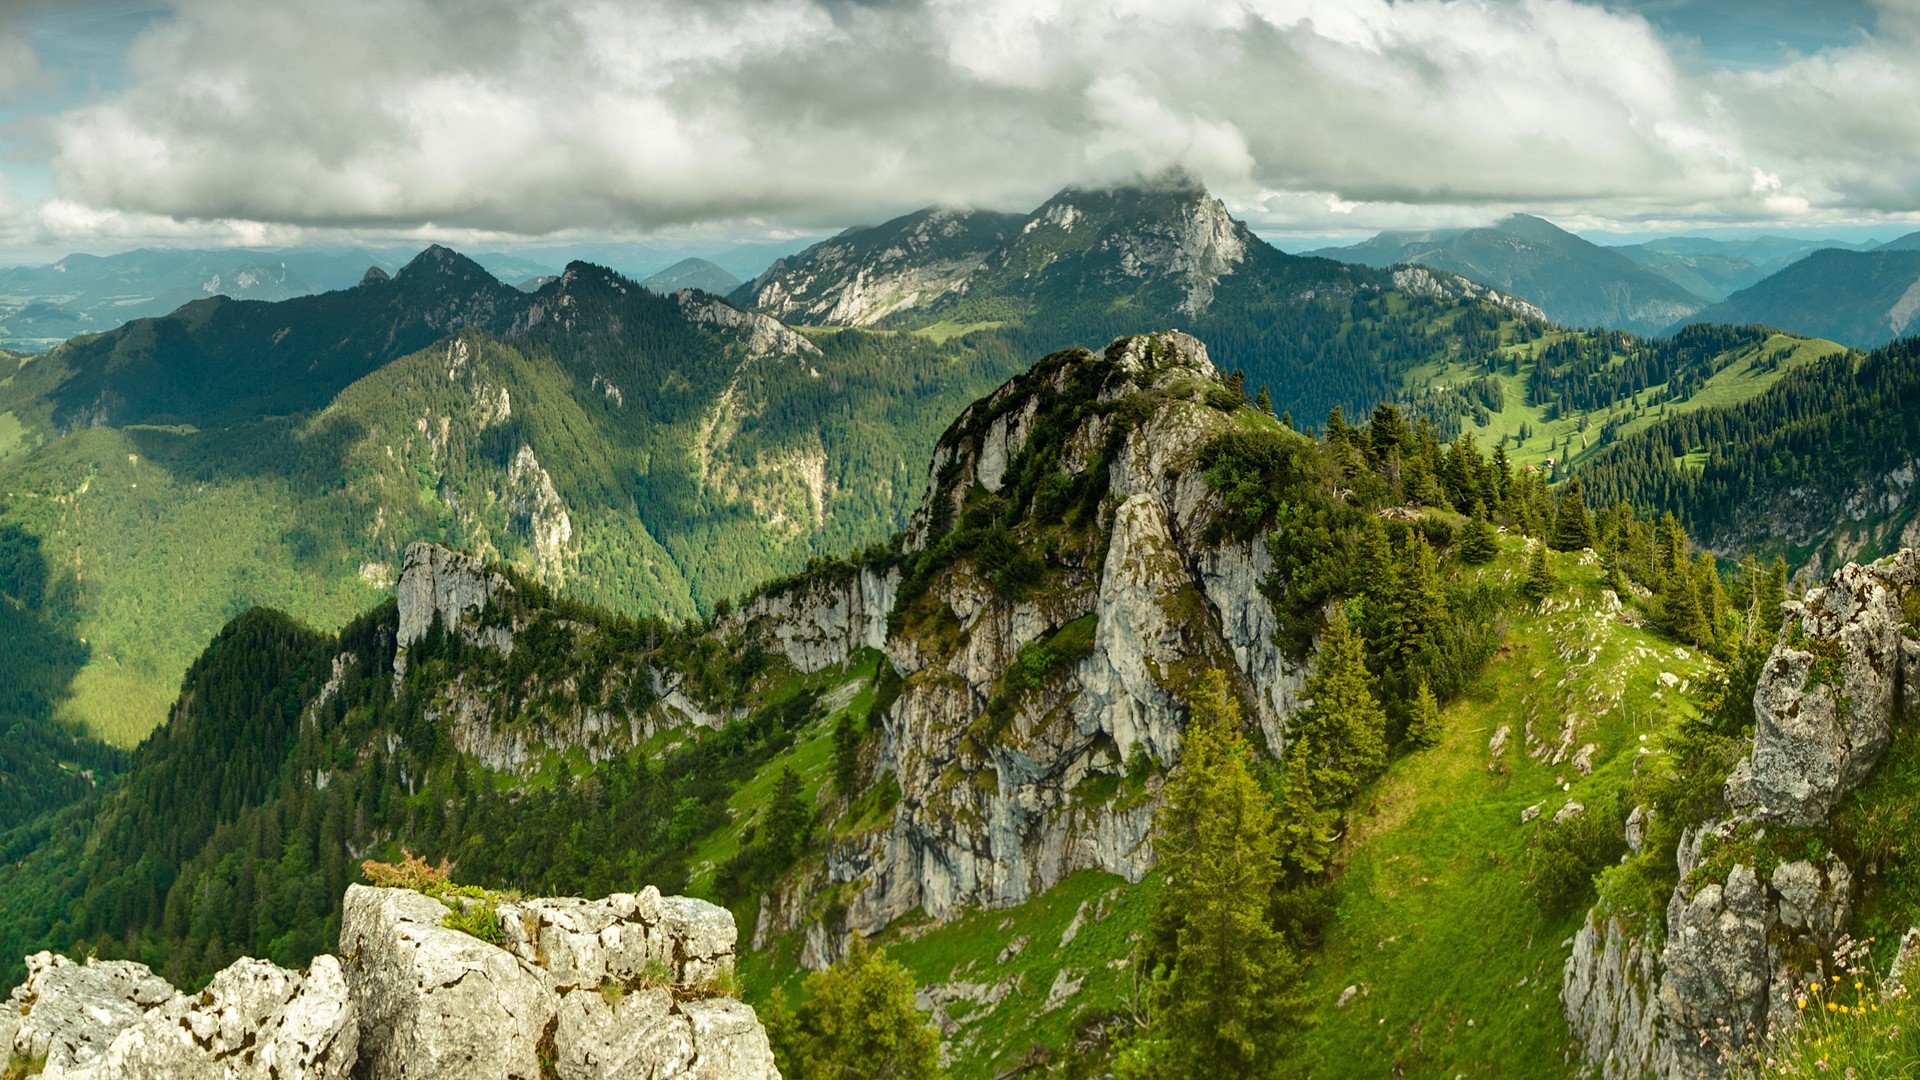 General 1920x1080 landscape mountains forest nature Alps rocks rock formation